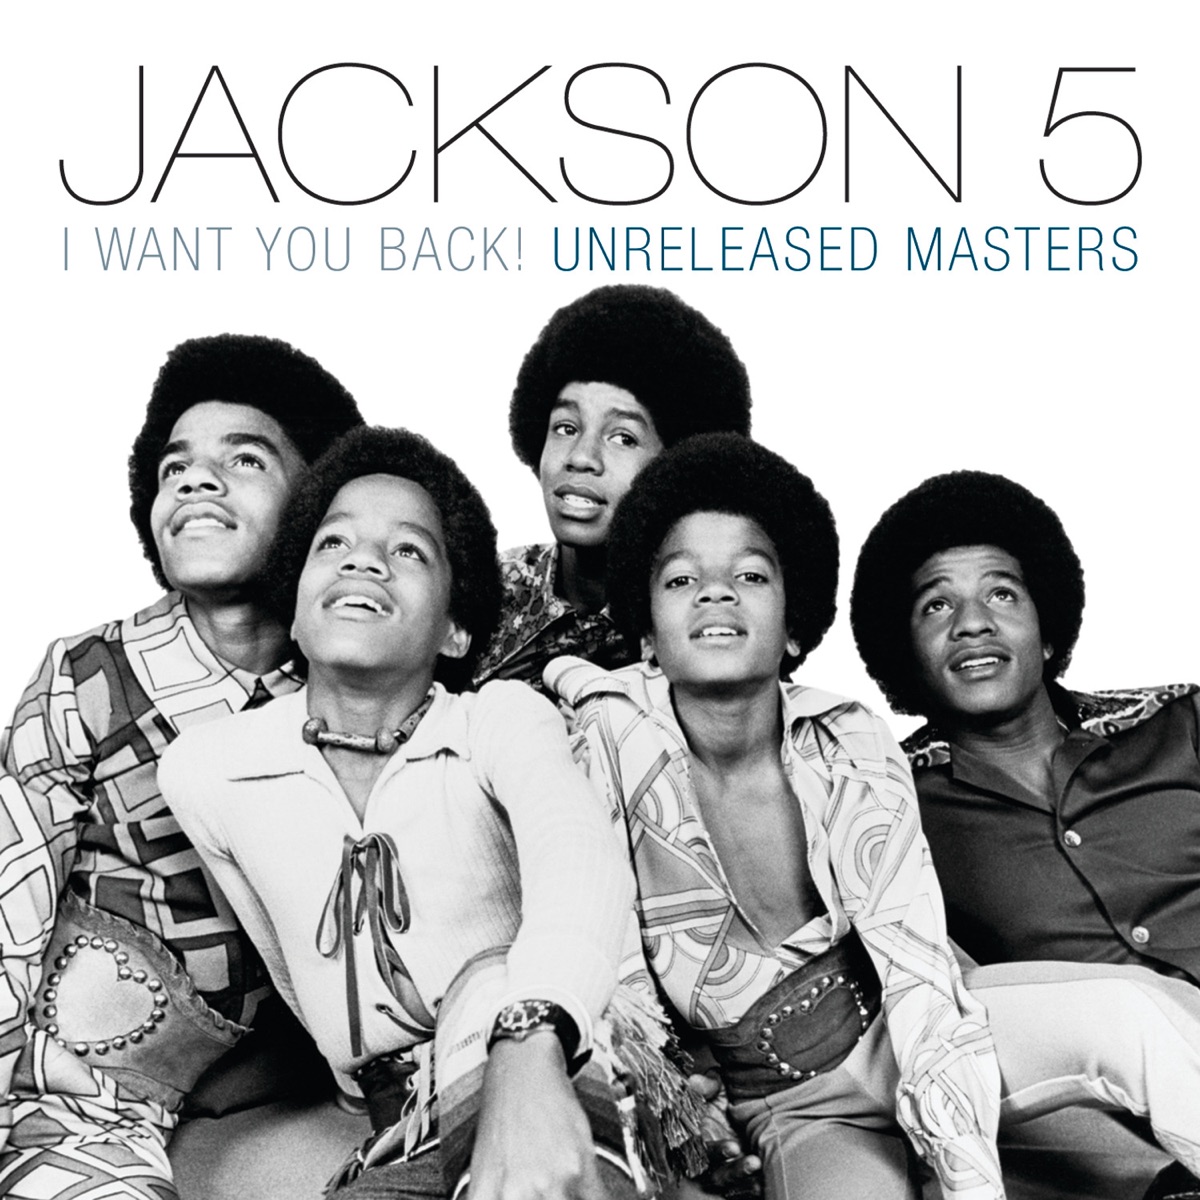 ABC by Jackson 5 on Apple Music